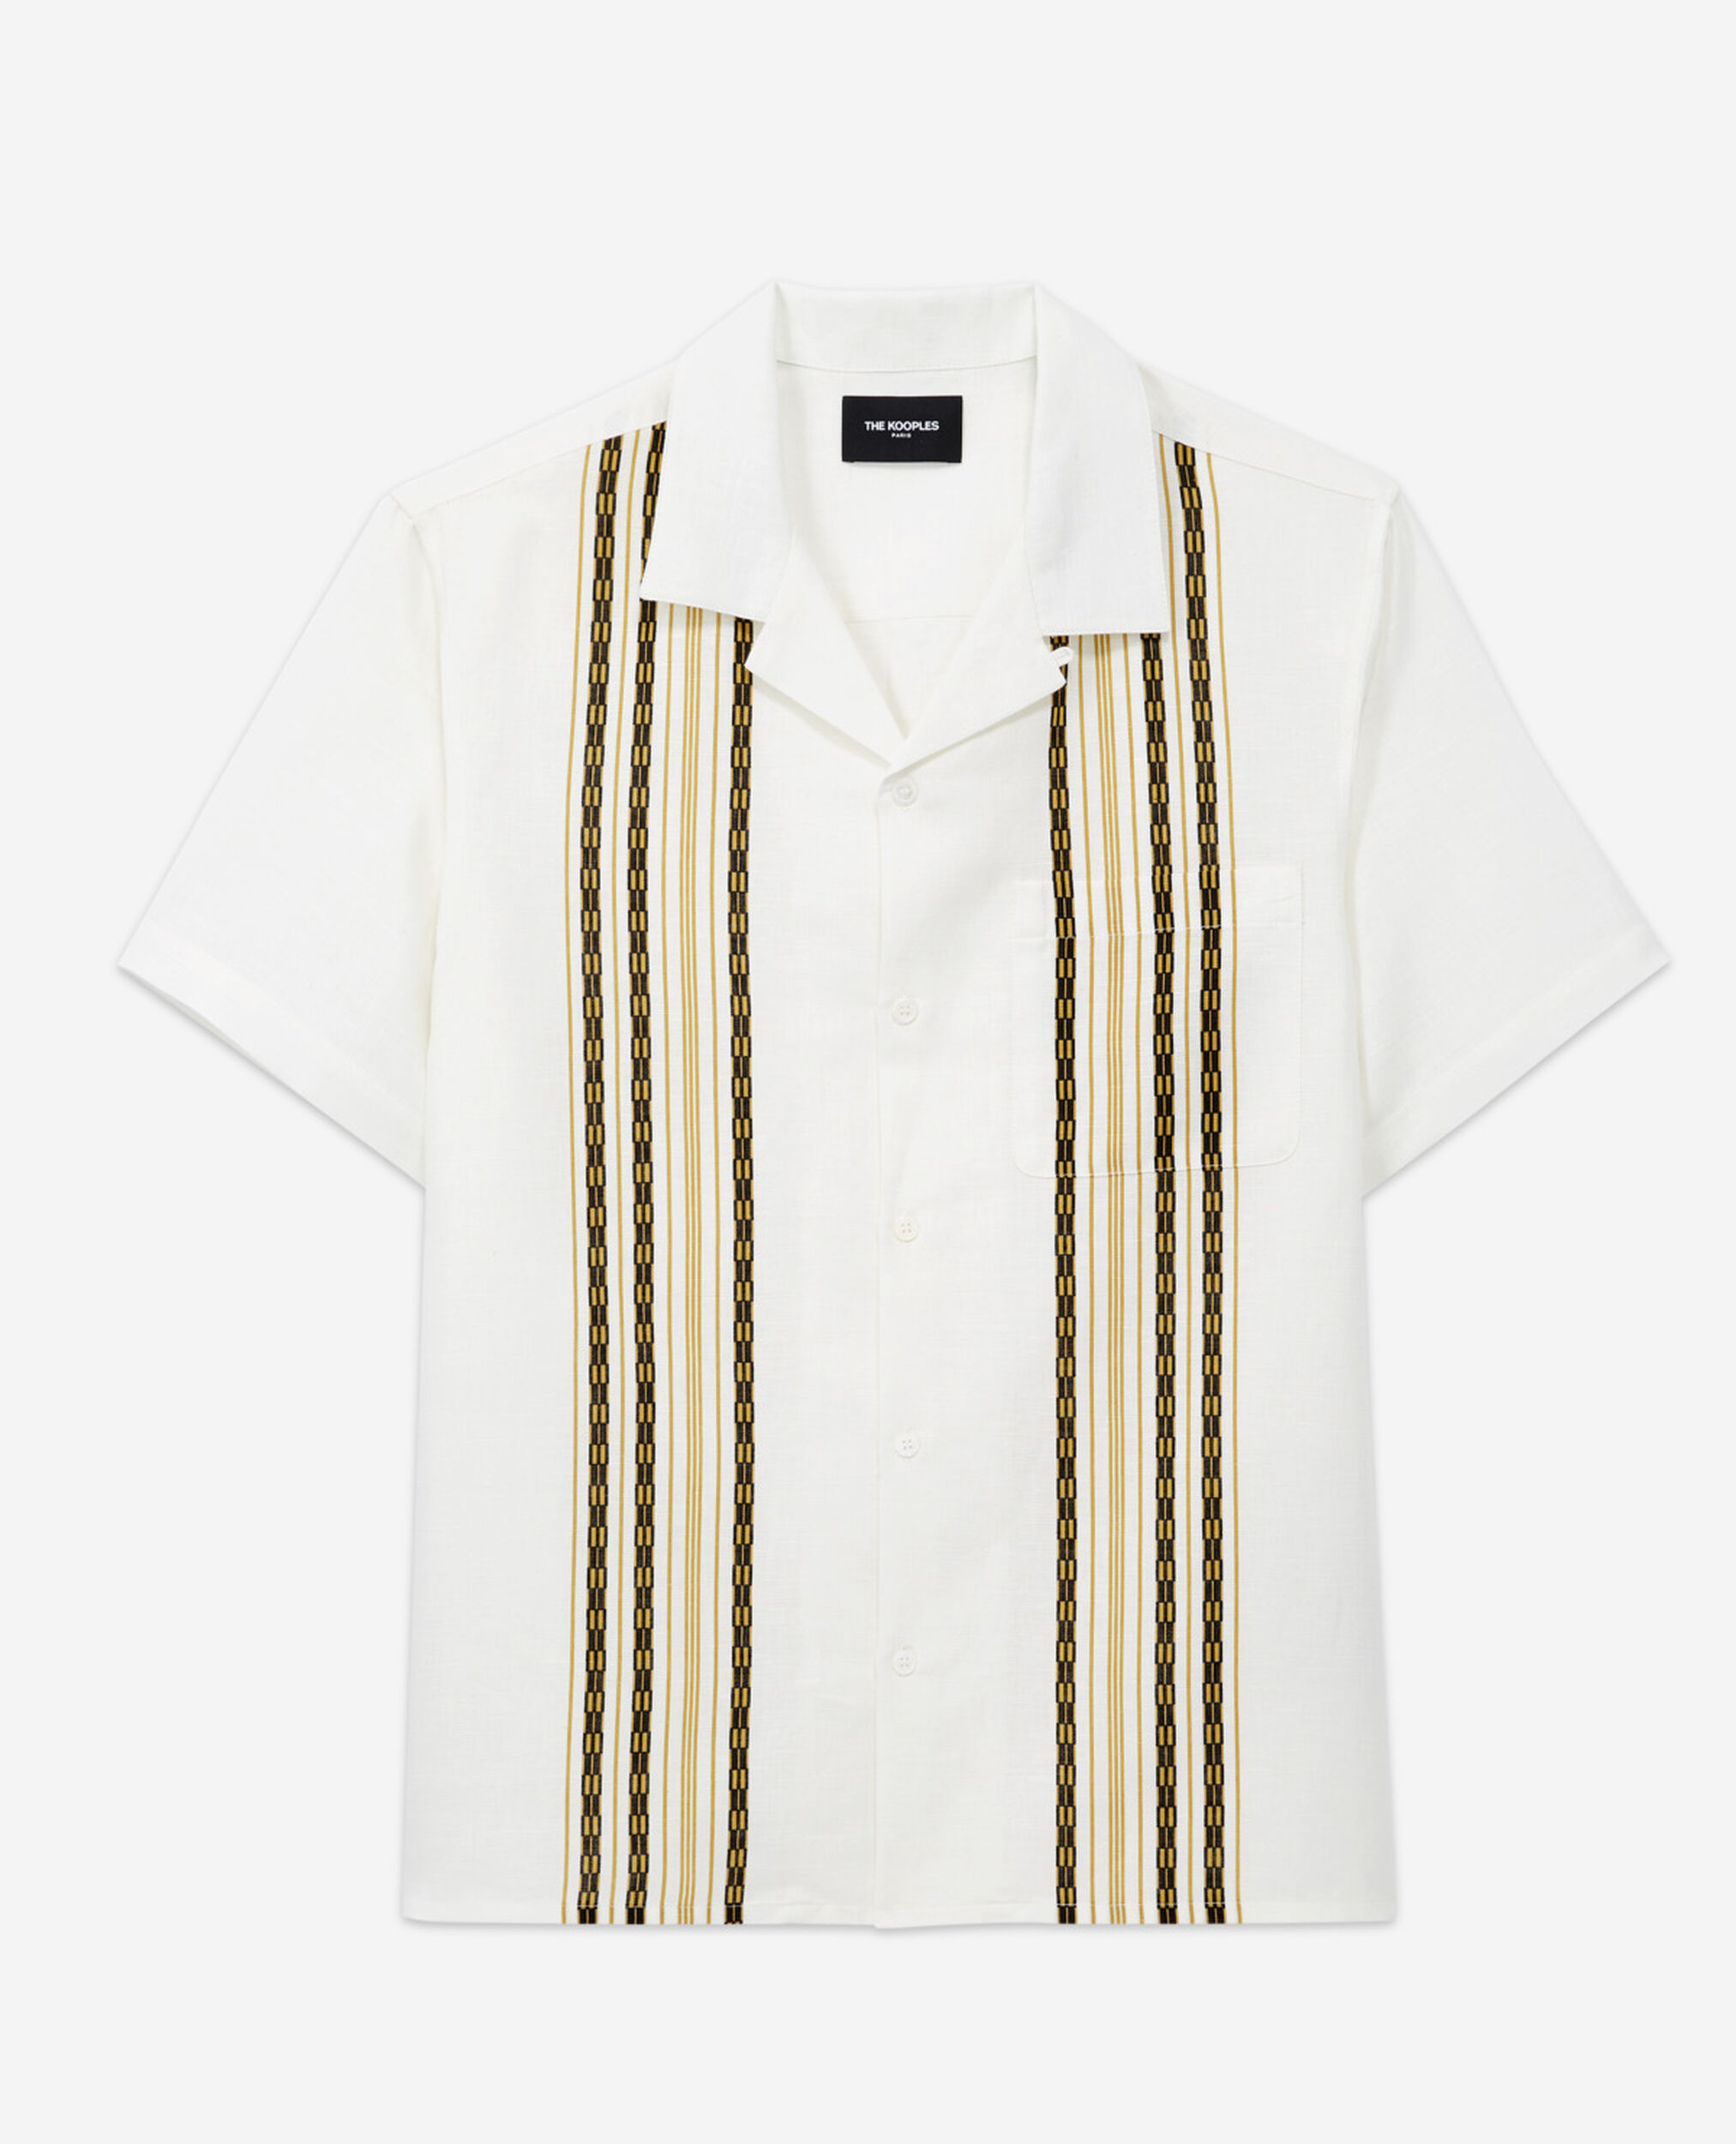 Camisa algodón motivo rayas verticales, WHITE - YELLOW, hi-res image number null